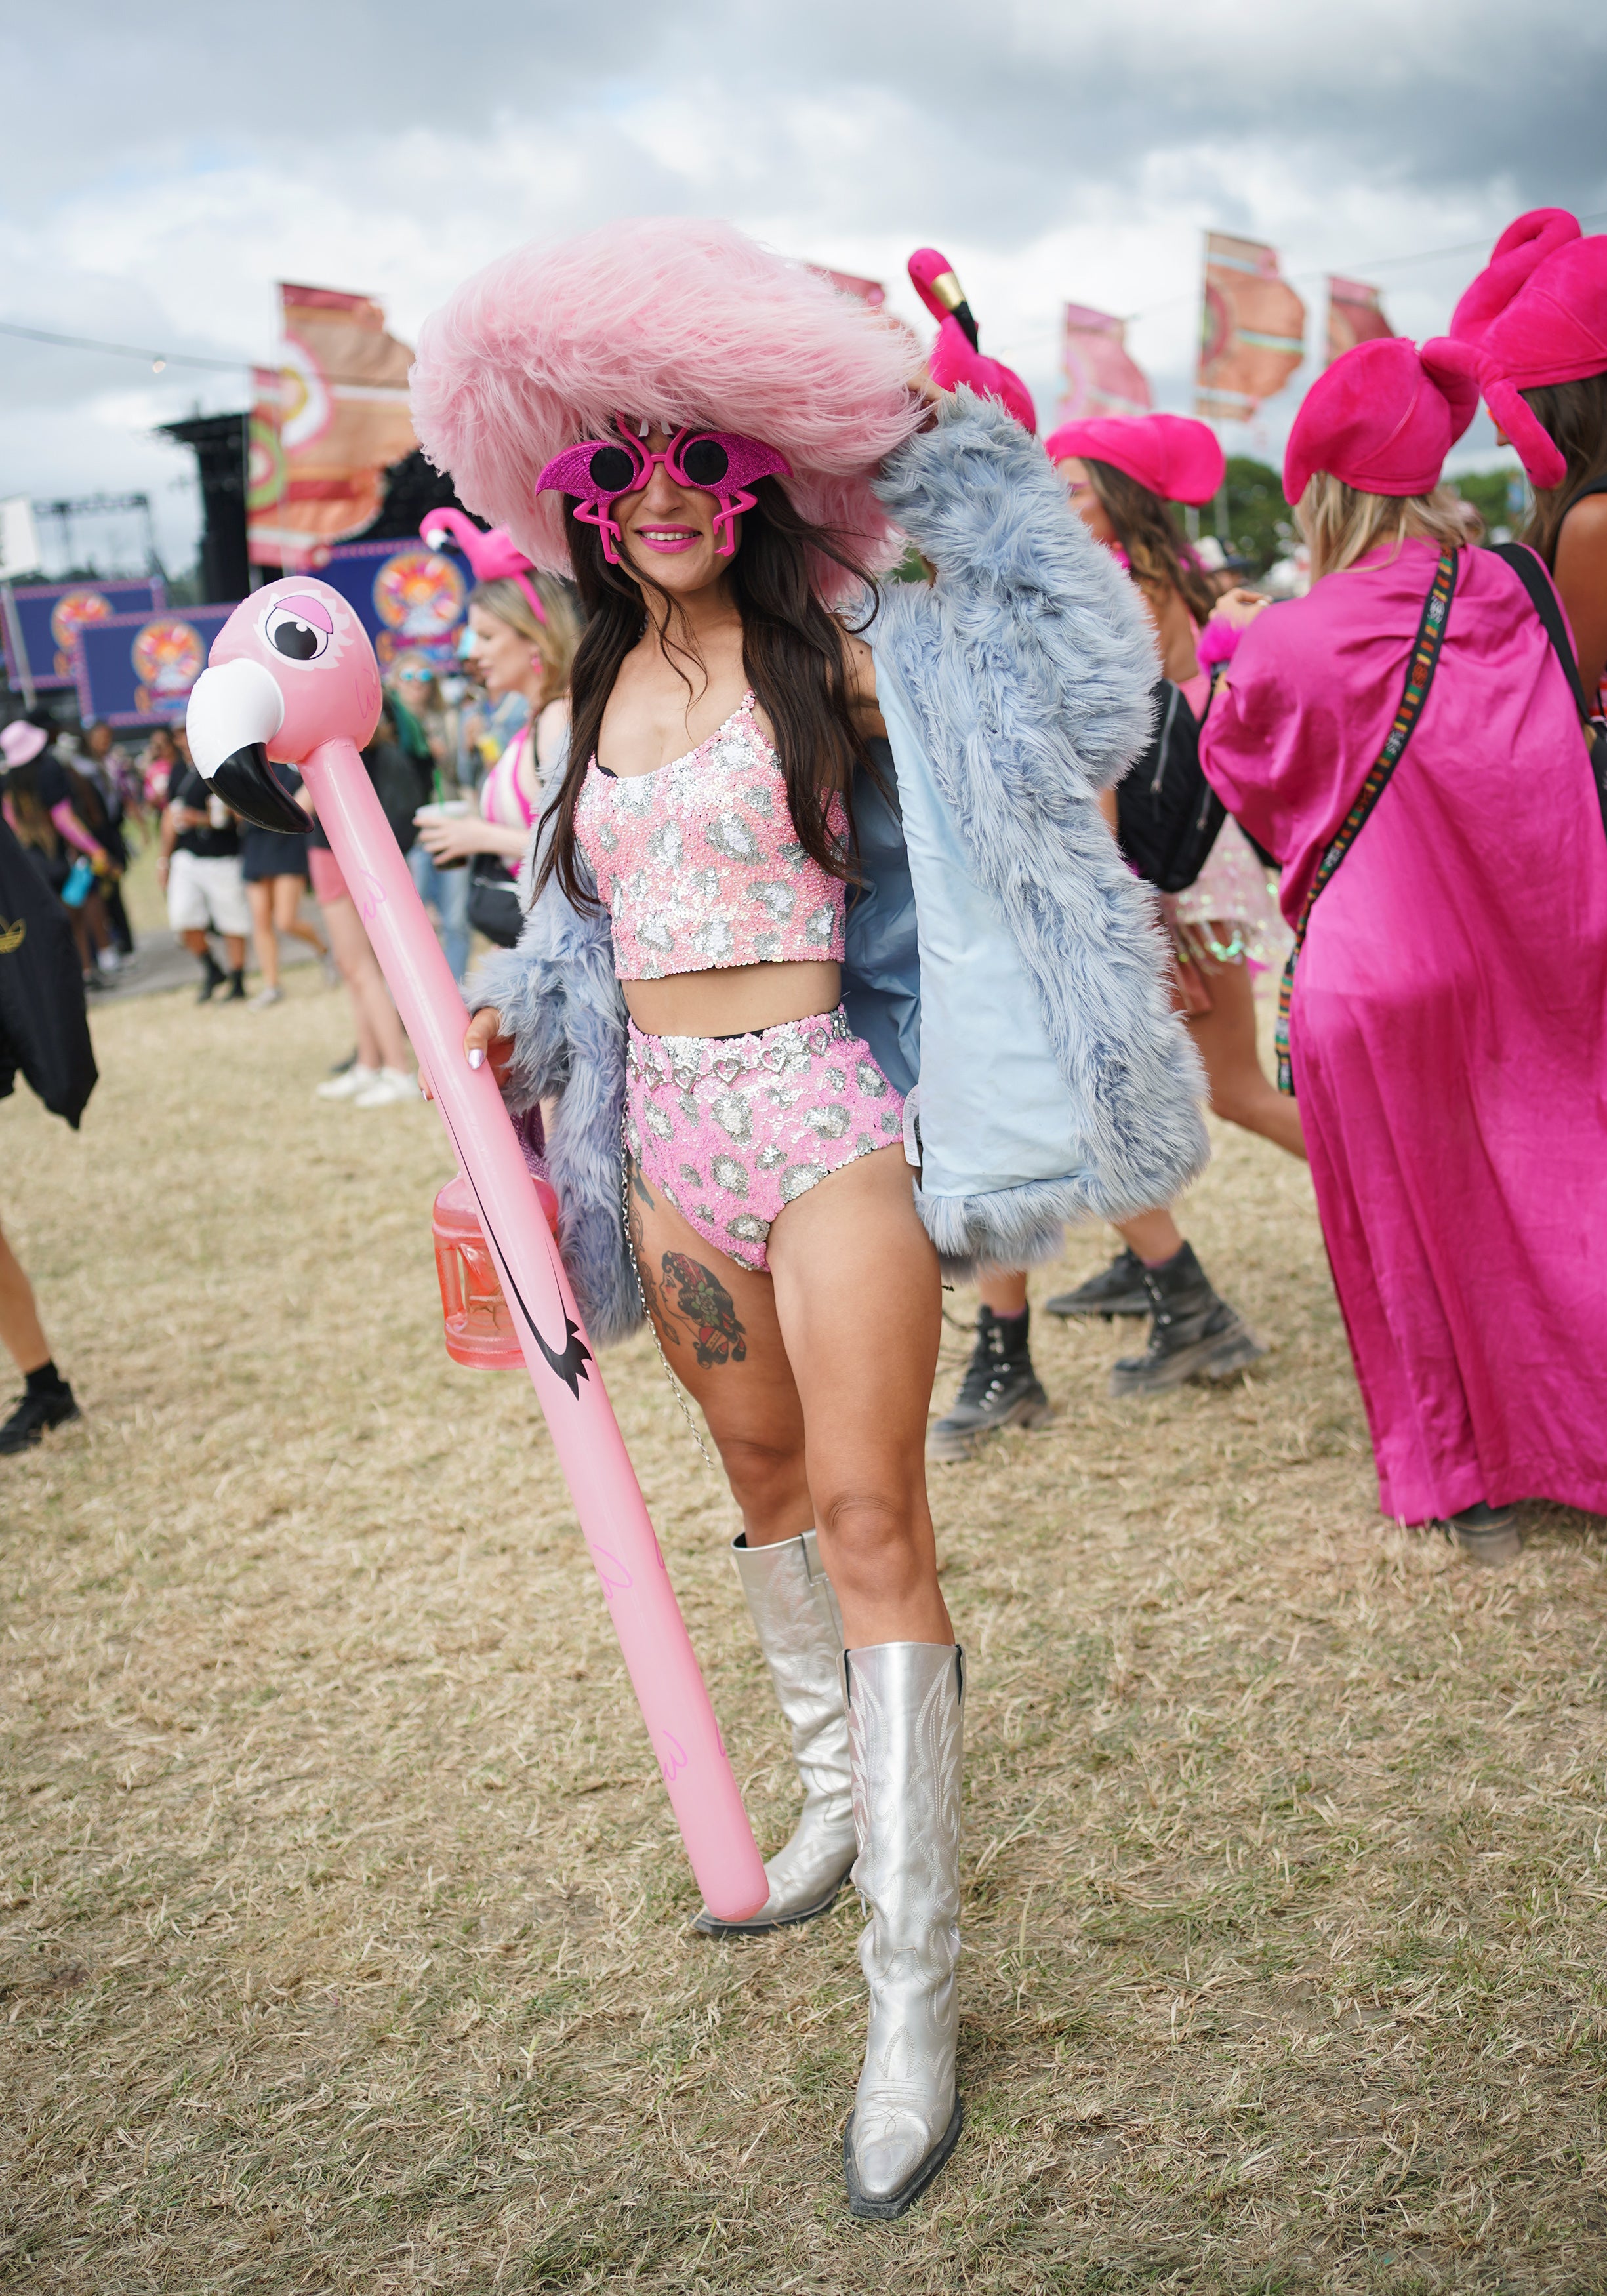 Festivalgoer Saira Biruta dressed in a flamingo costume at the Glastonbury Festival (Yui Mok/PA)